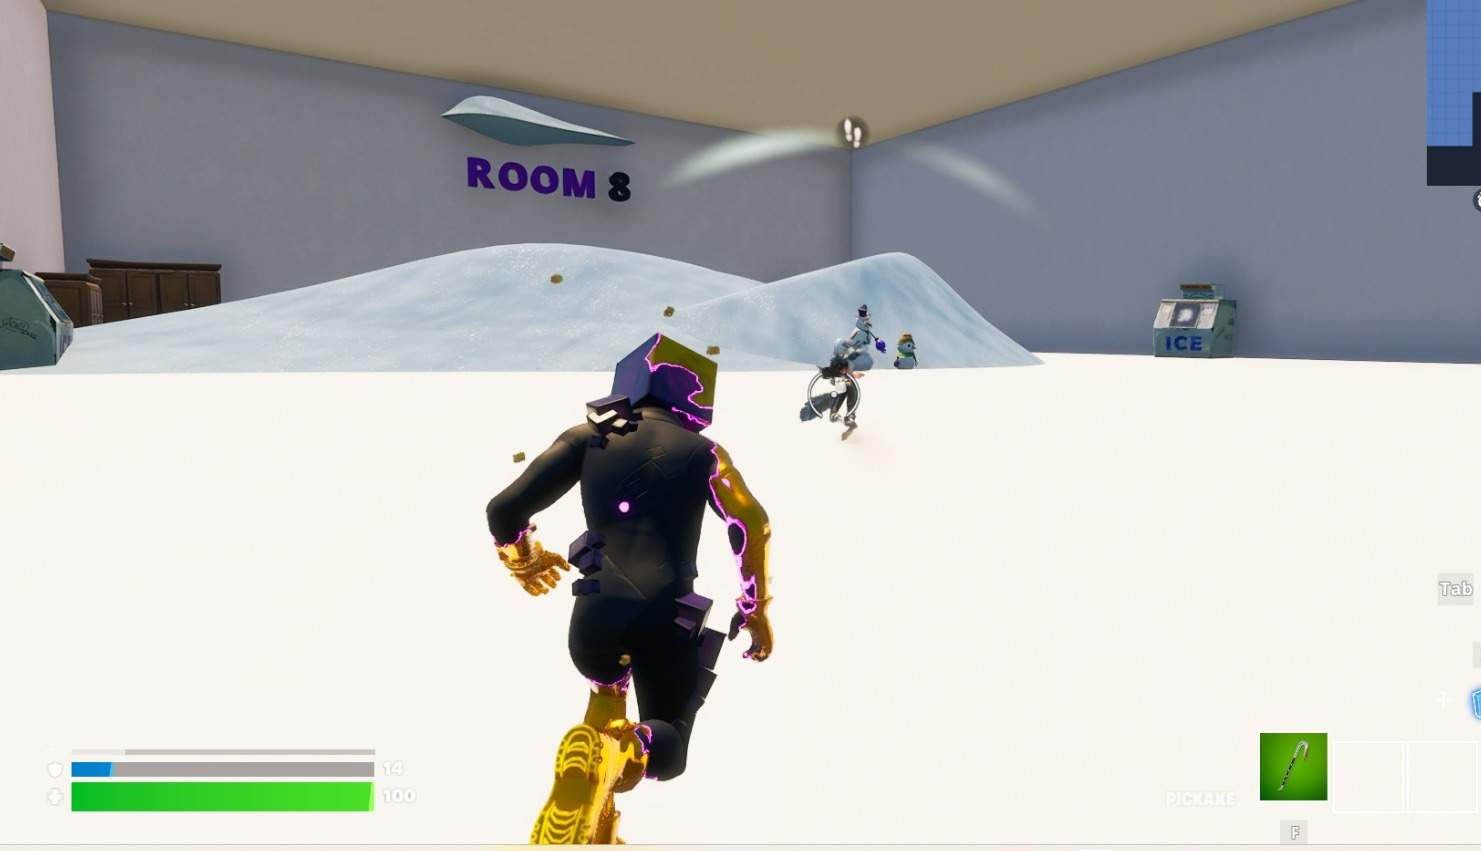 Escape 10 Rooms Over image 2